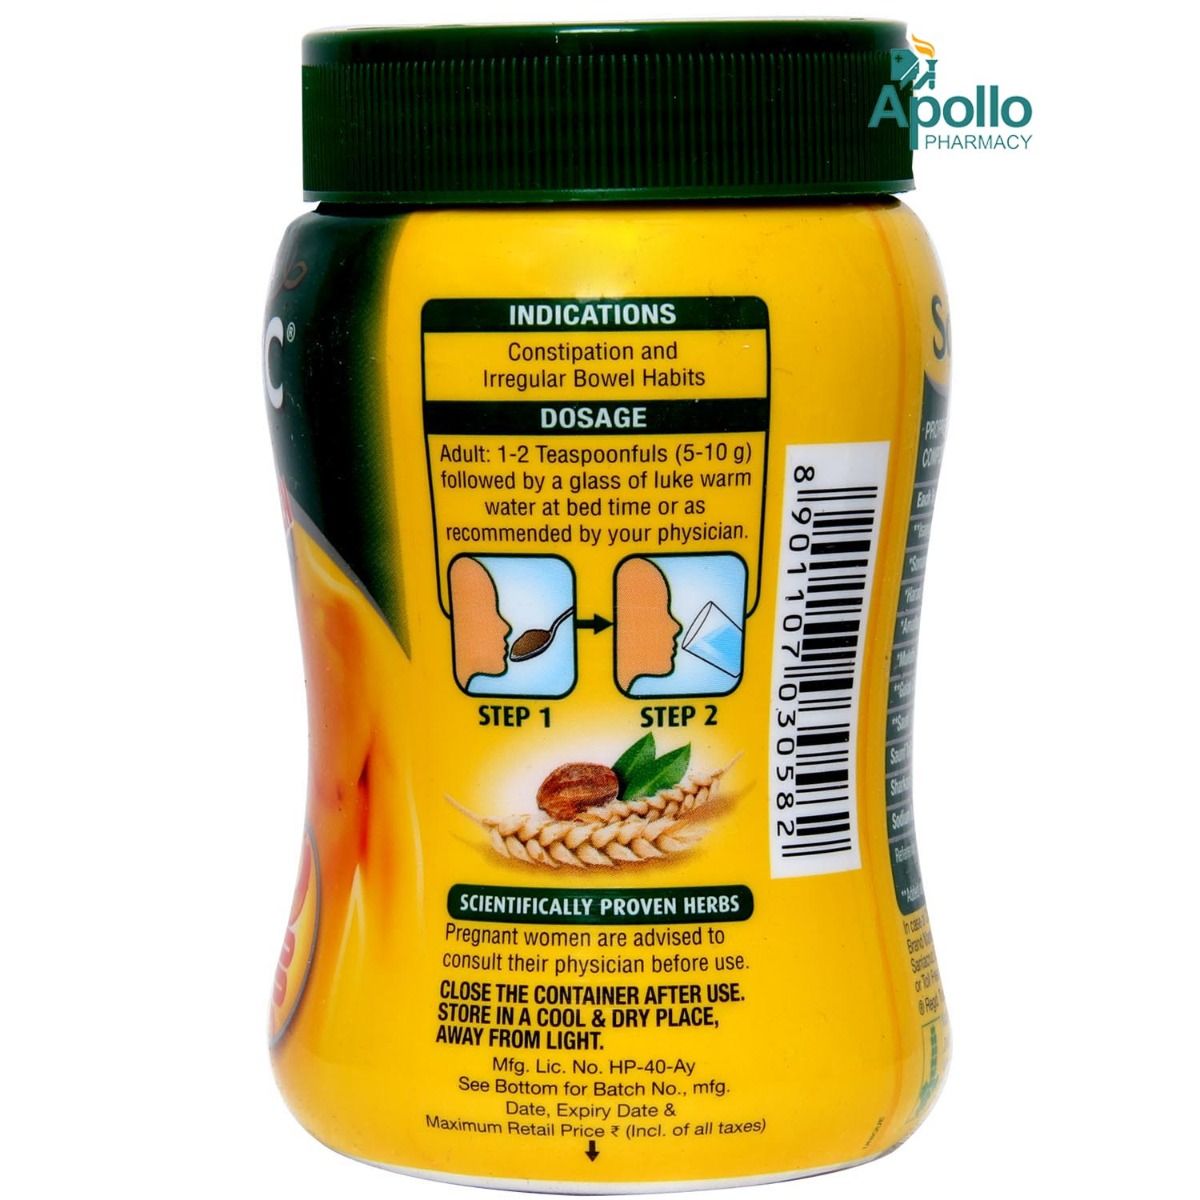 Softovac Bowel Regulator Powder, 100 gm, Pack of 1 